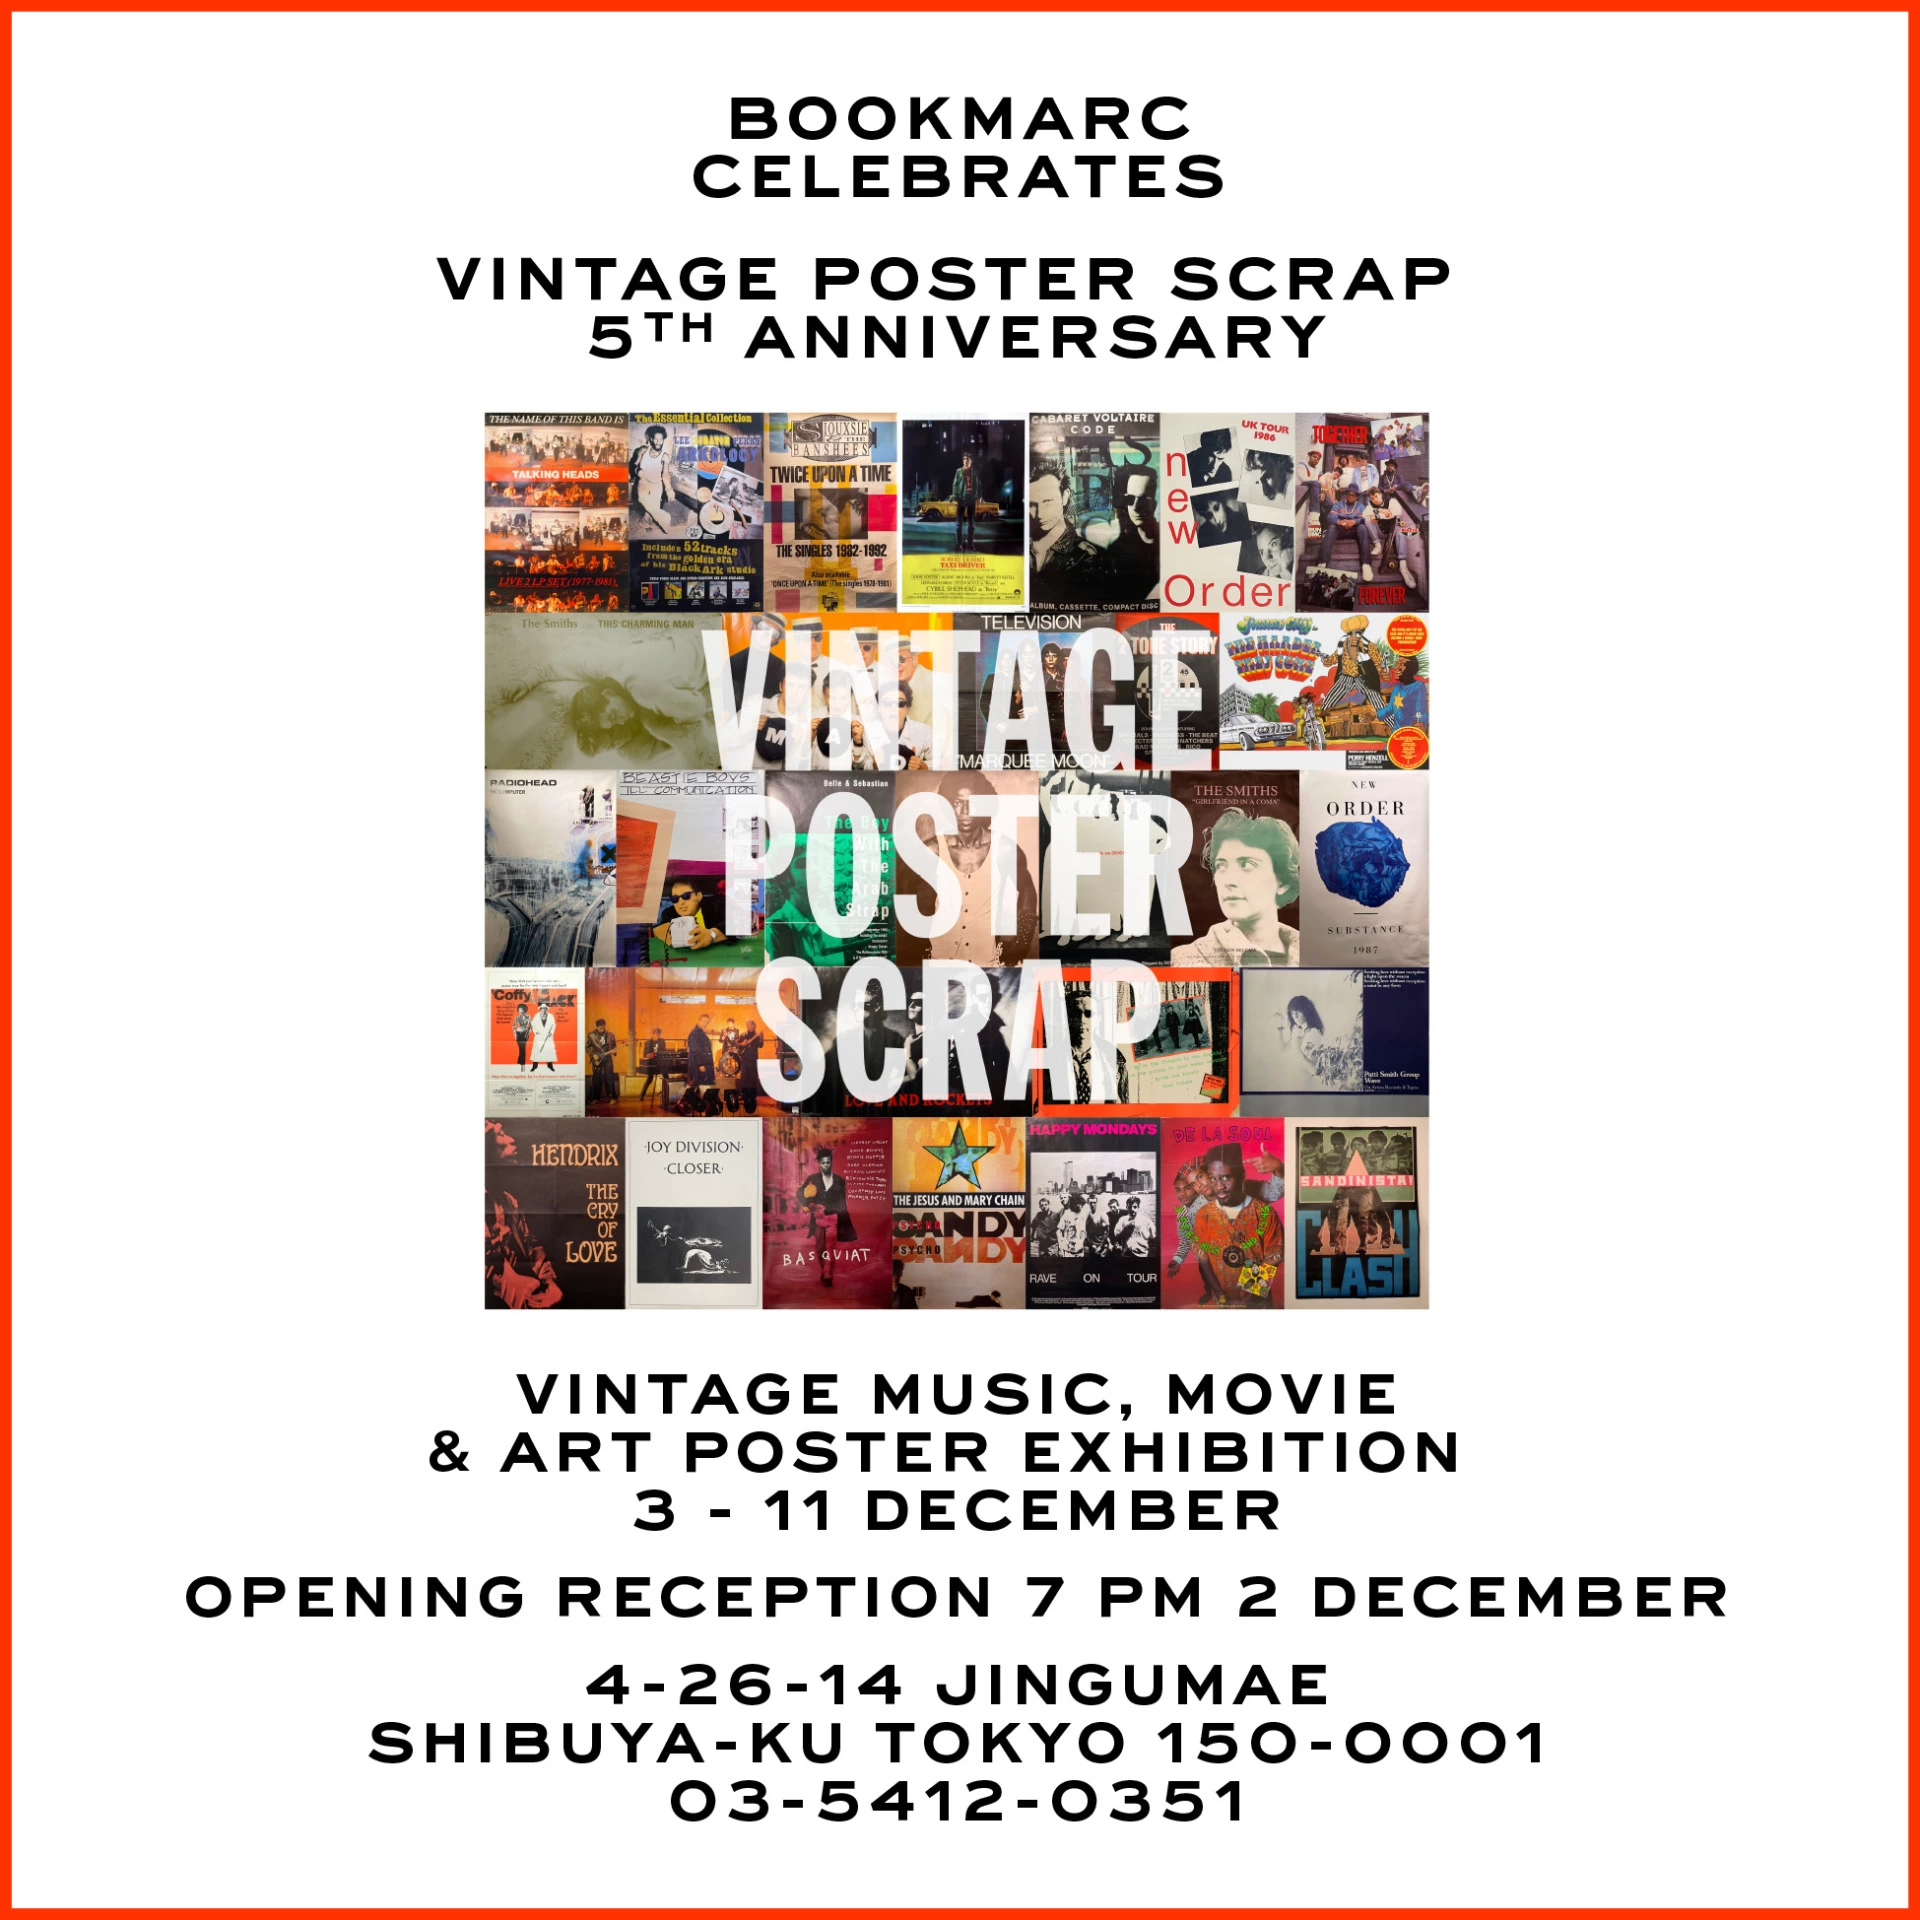 VINTAGE POSTER SCRAP 5th ANNIVERSARY VINTAGE MUSIC, MOVIE & ART POSTER EXHIBITION